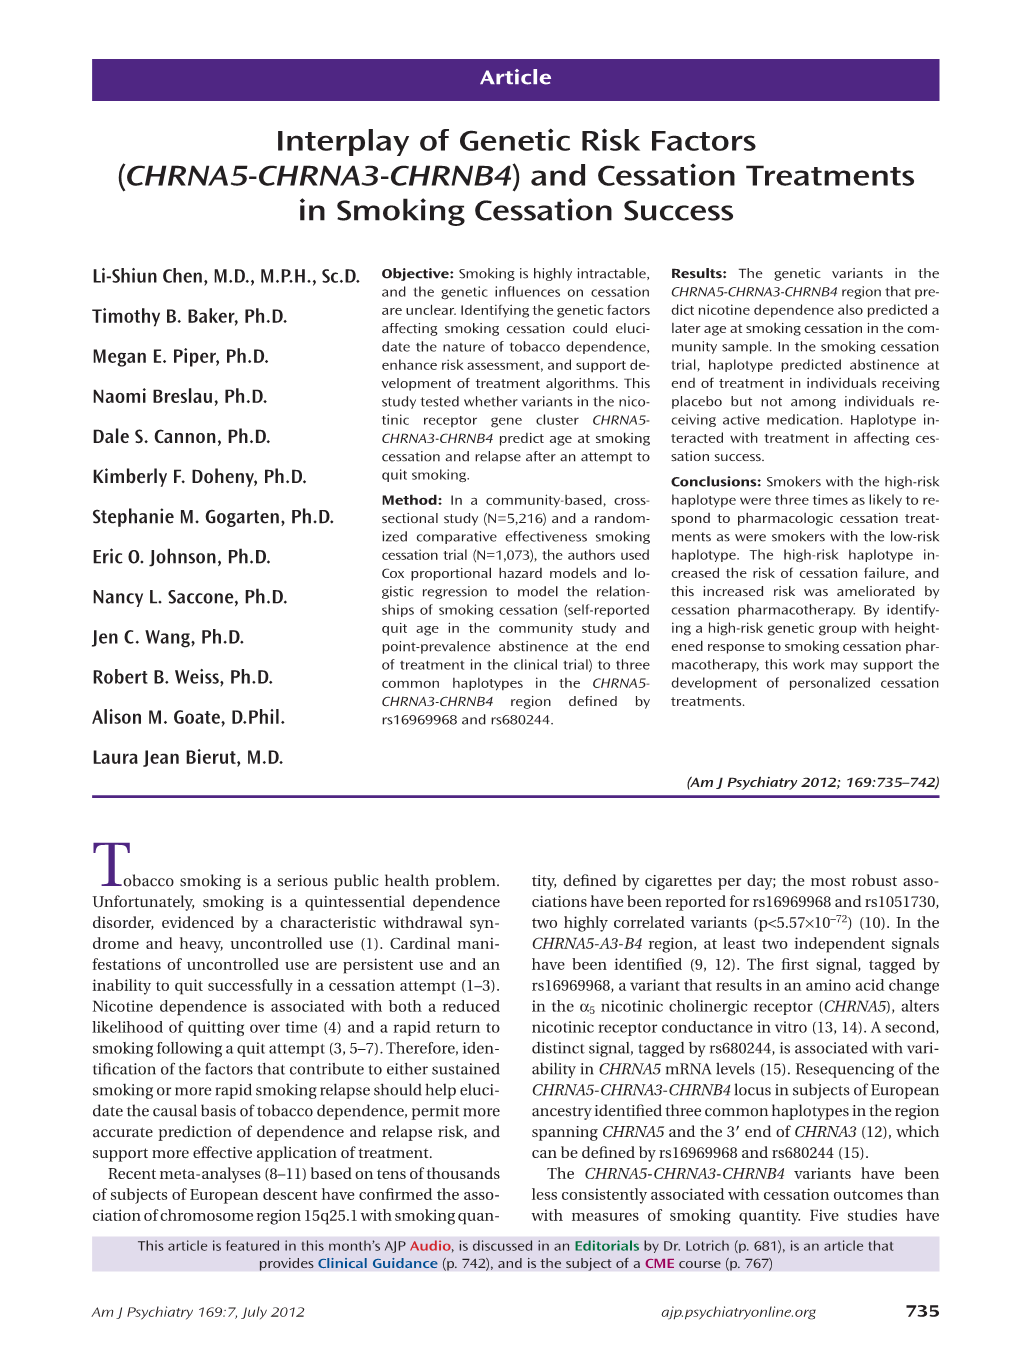 (CHRNA5-CHRNA3-CHRNB4) and Cessation Treatments in Smoking